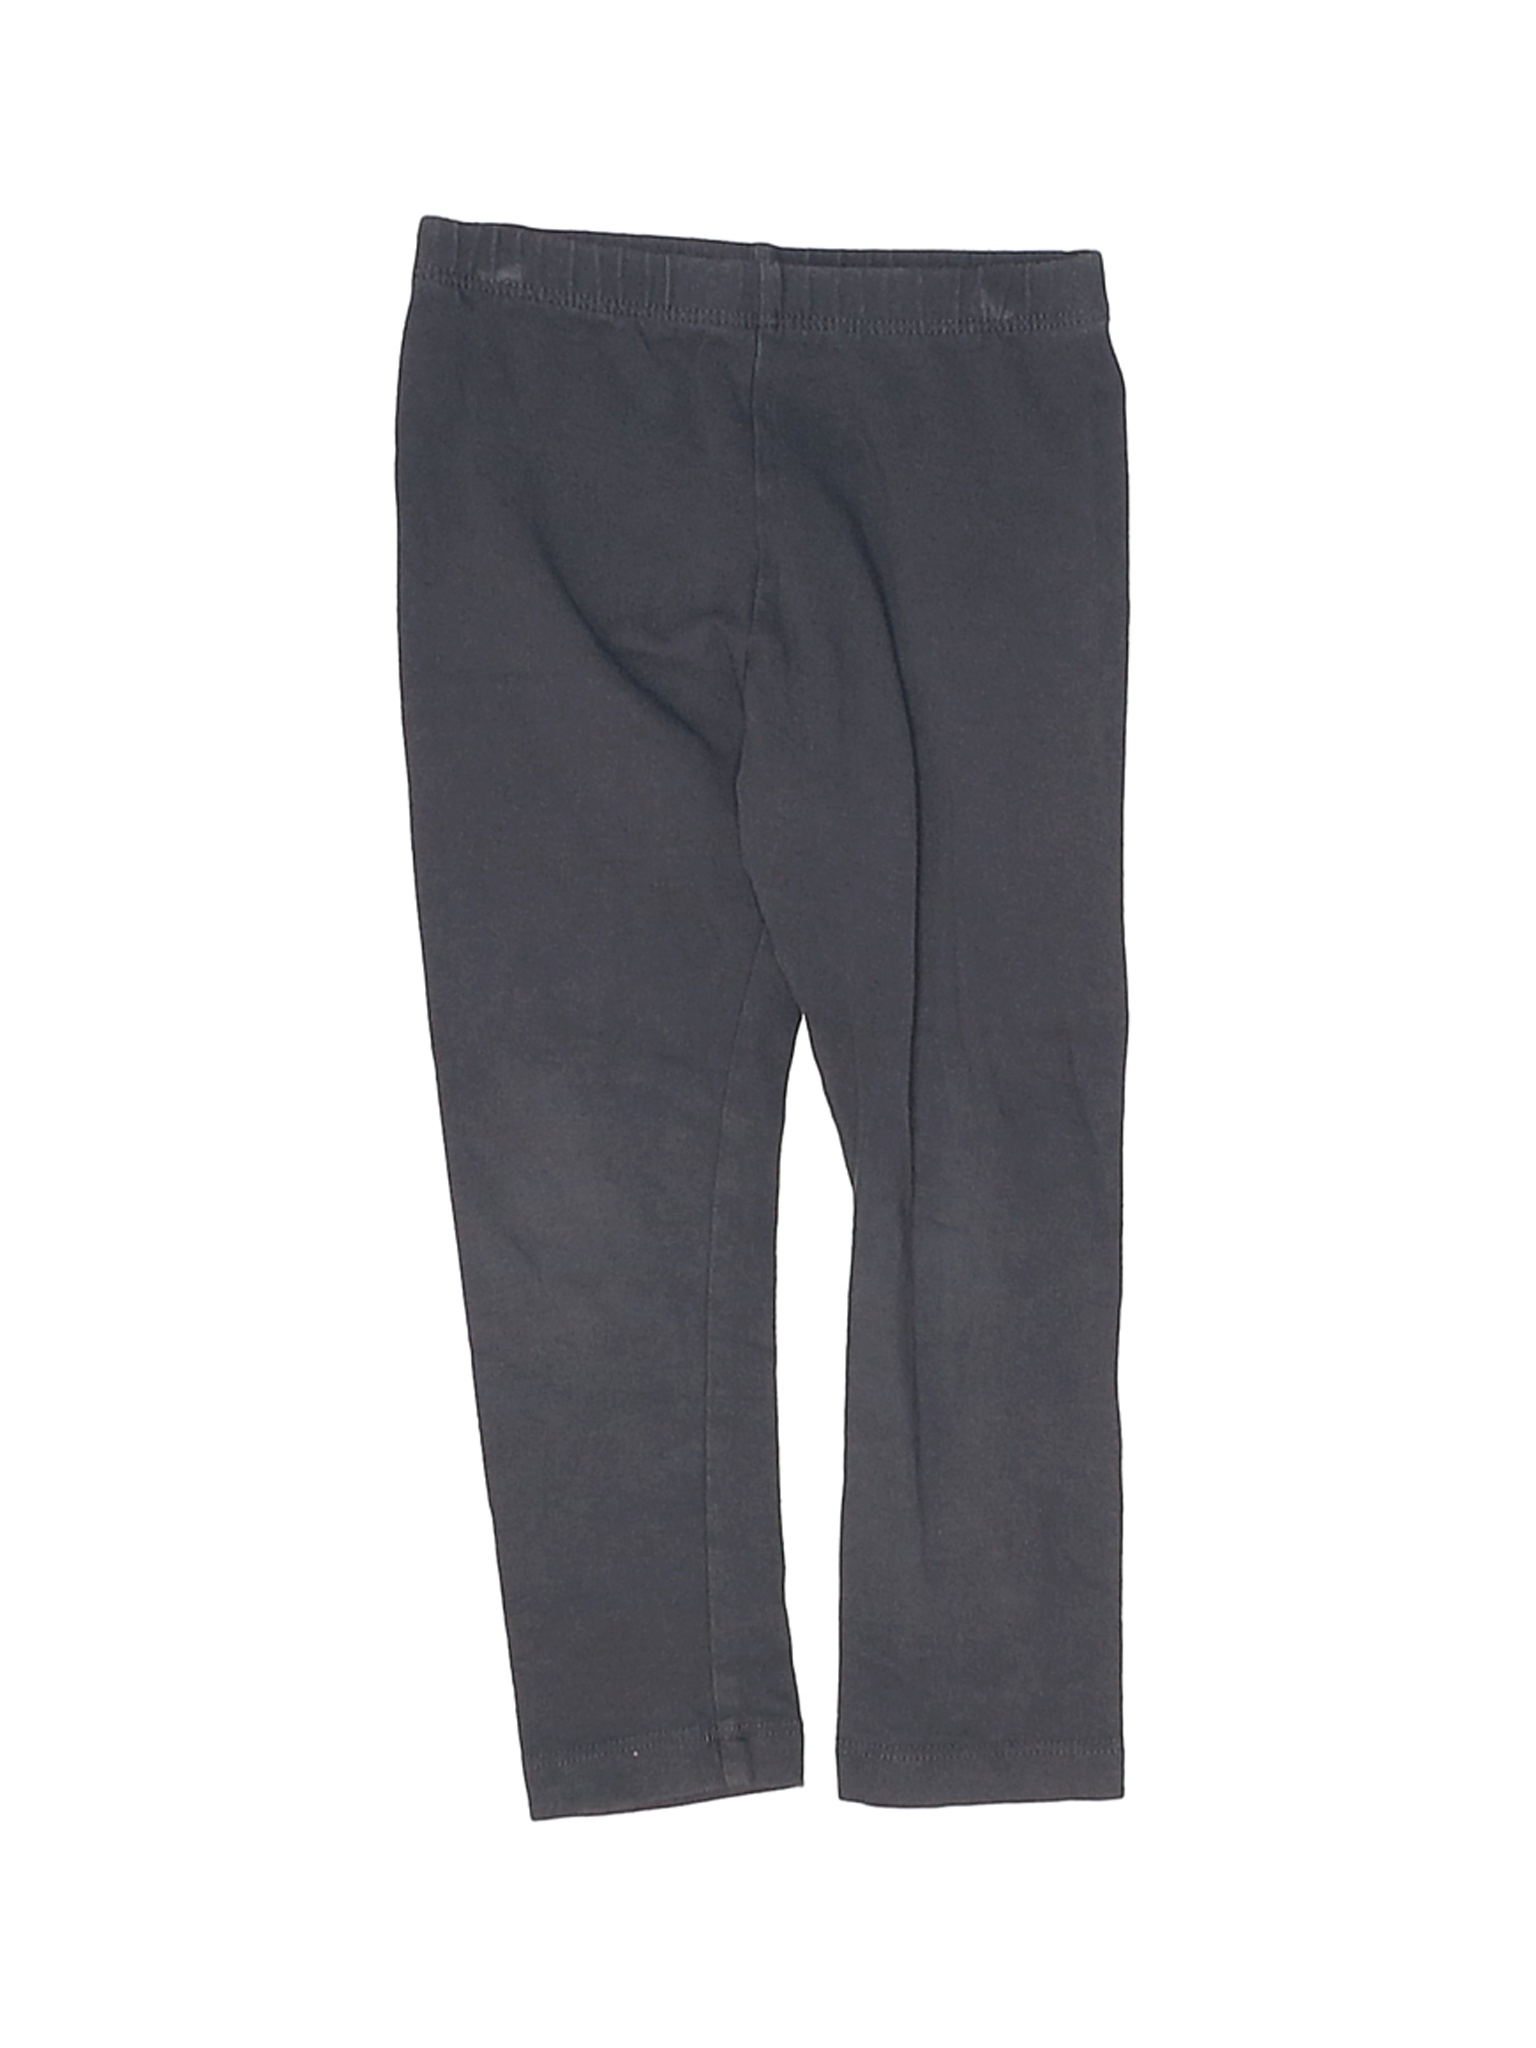 Old Navy Boys Gray Sweatpants 3T | eBay